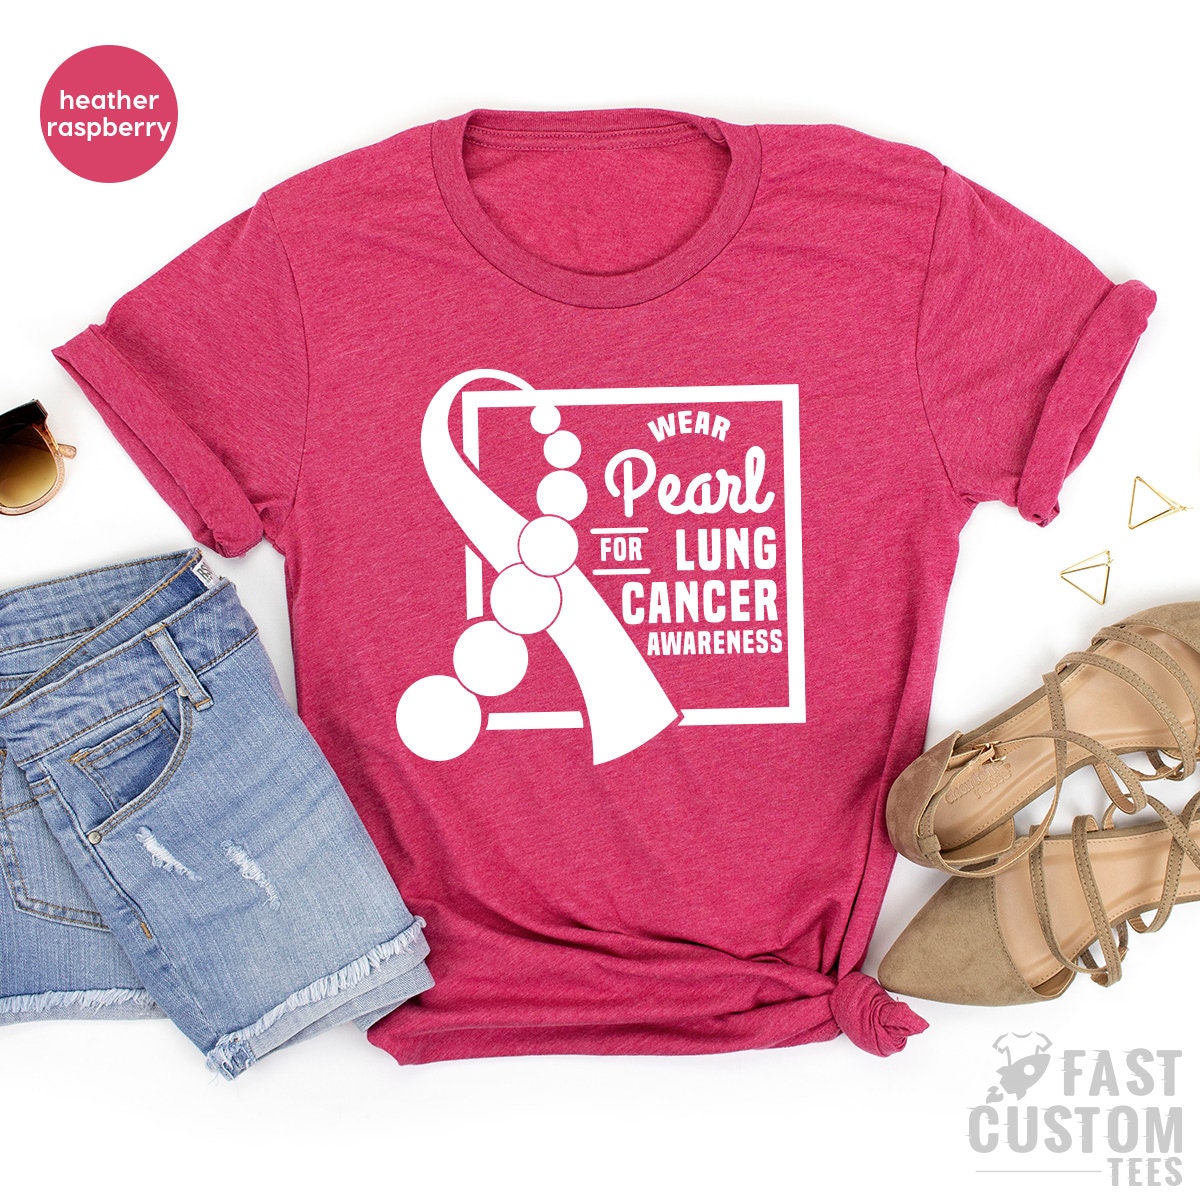 Cancer T Shirt, Lung Cancer Awareness, Cancer Survivor Shirt, Fight Cancer Shirt, Wear Pearl For Lung Cancer, Support Cancer Shirt - Fastdeliverytees.com